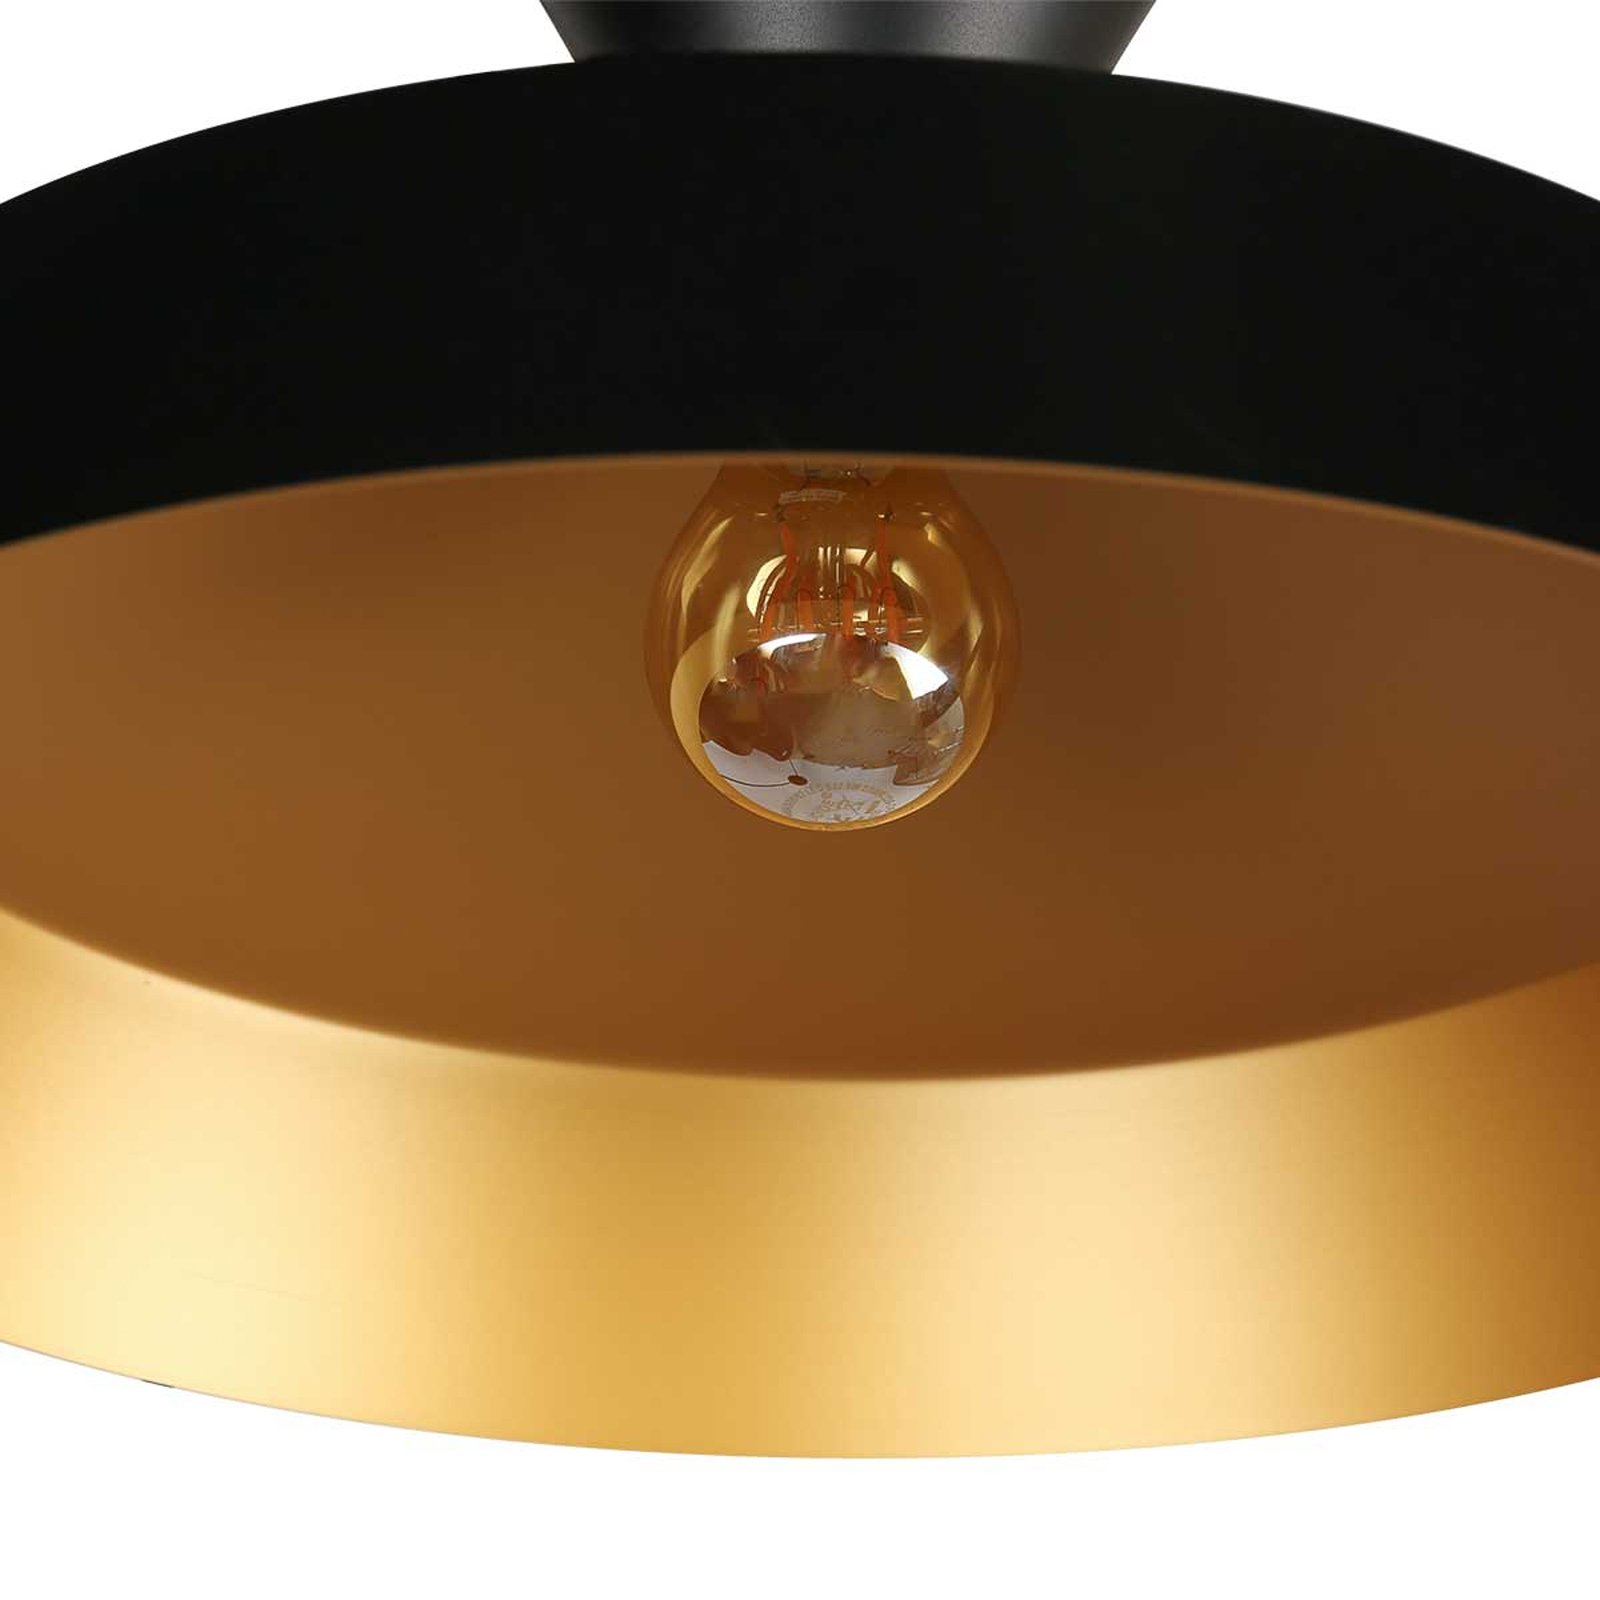 Skandina 3682ZW pendant light, black, metal, Ø 40 cm